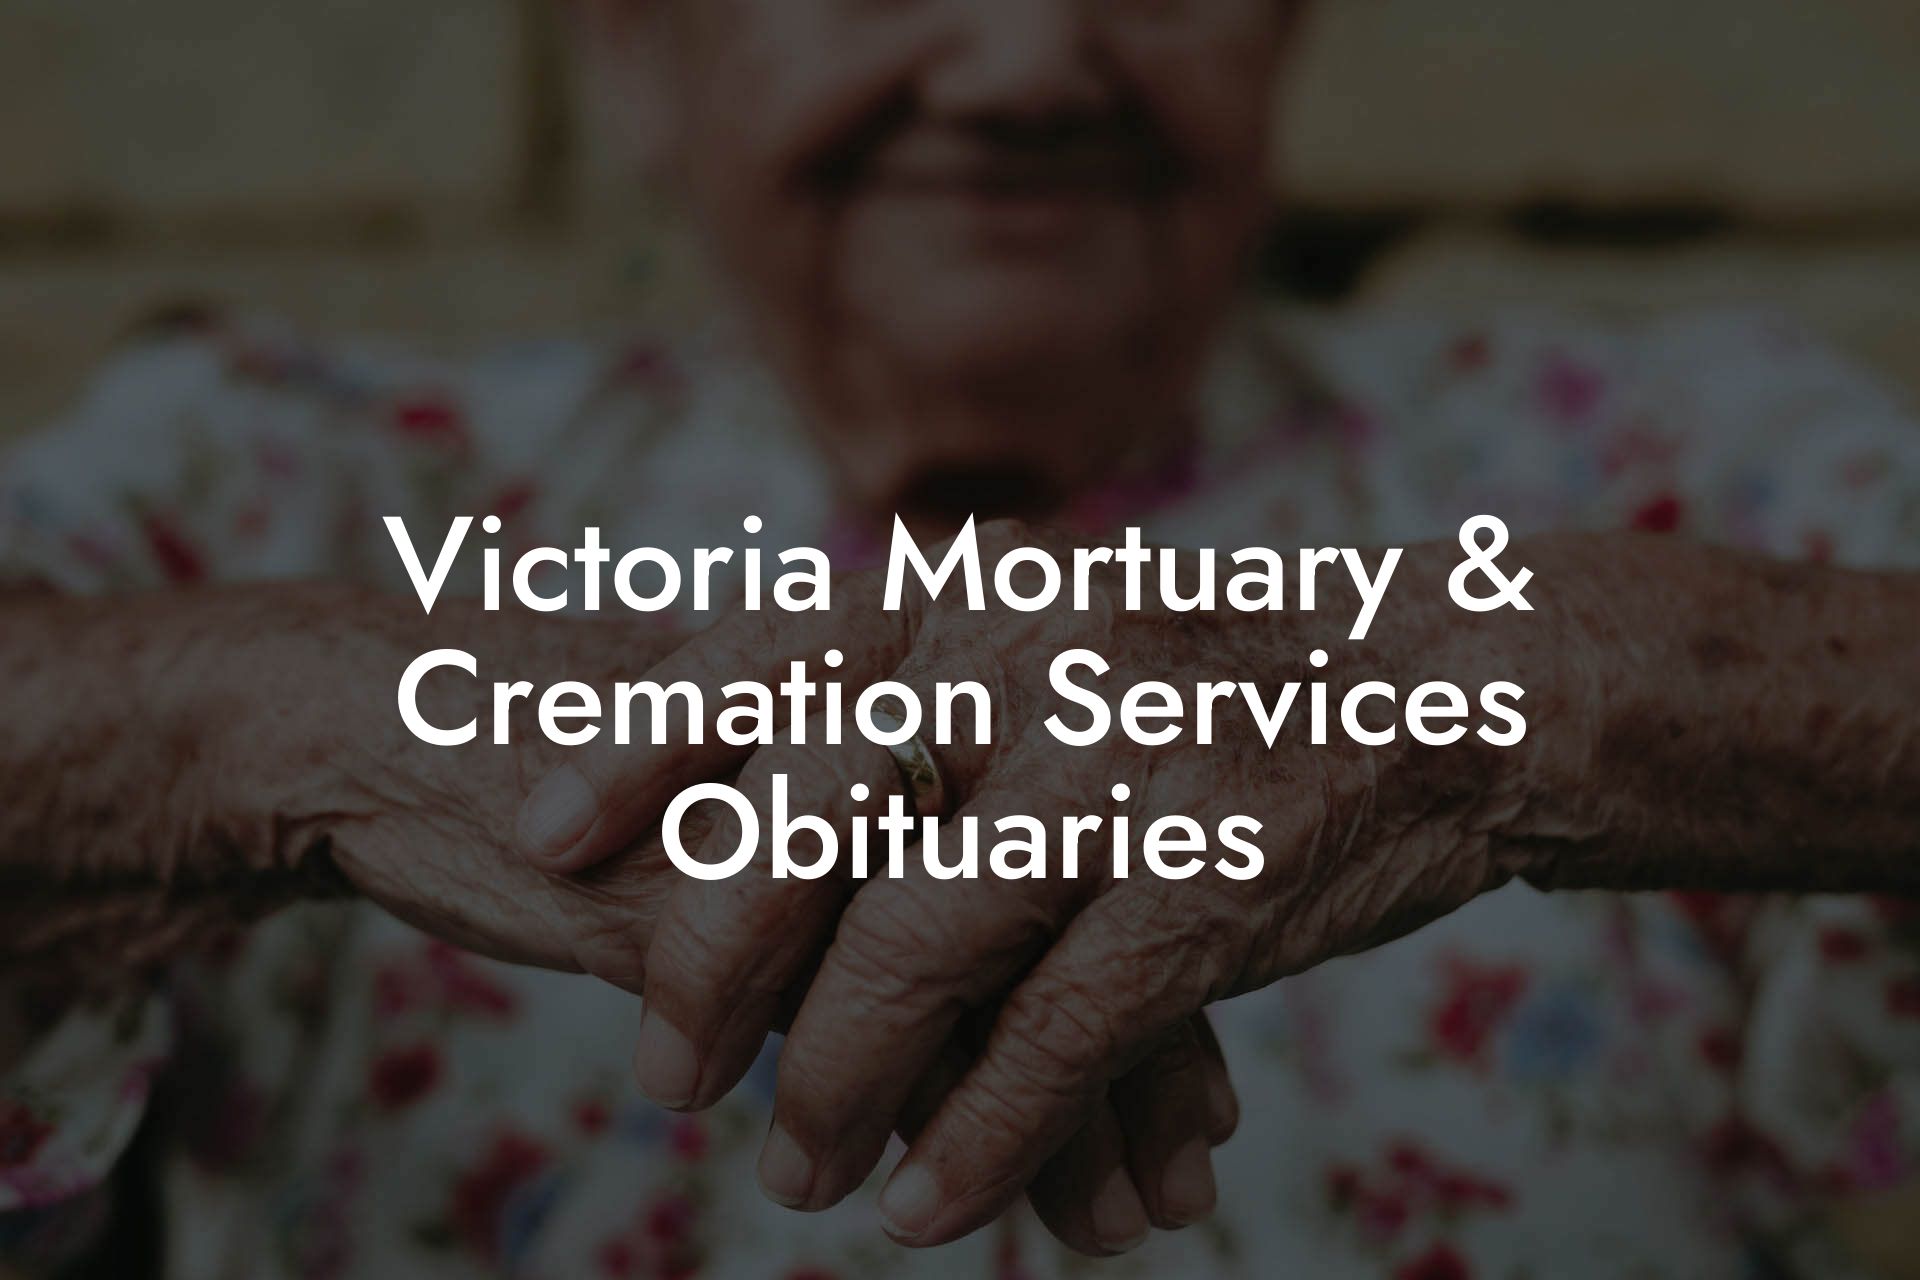 Victoria Mortuary & Cremation Services Obituaries